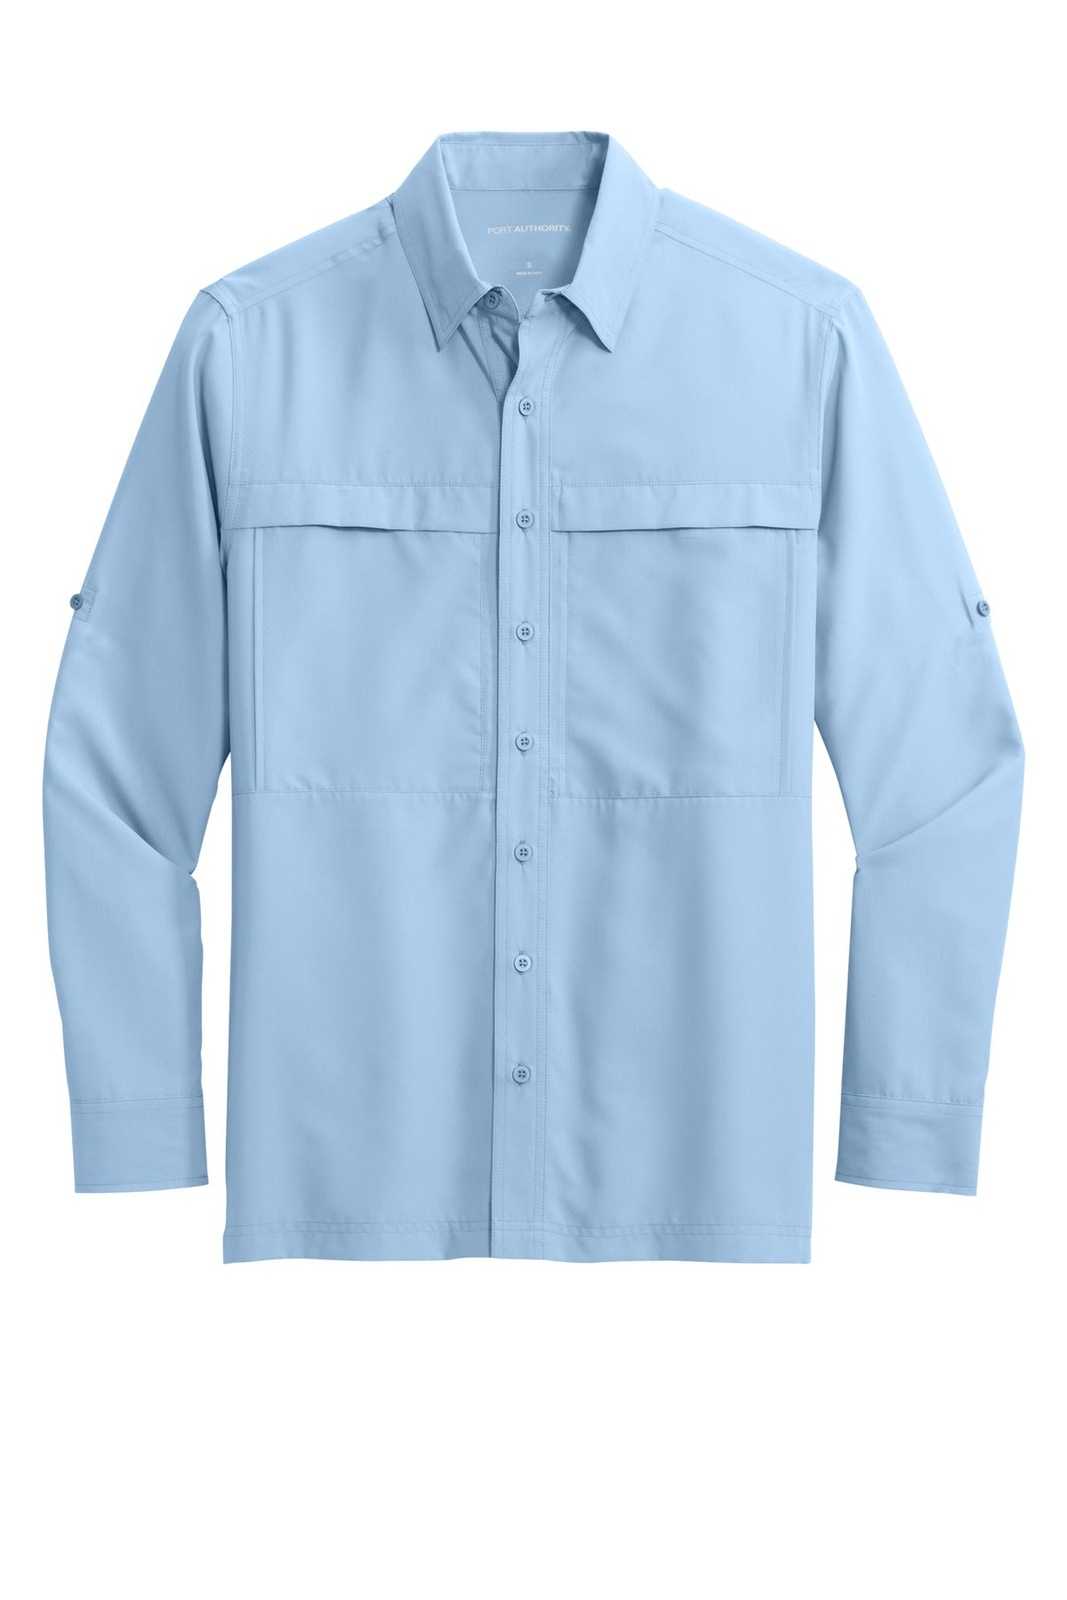 Port Authority W960 Long Sleeve UV Daybreak Shirt - Light Blue - HIT a Double - 2